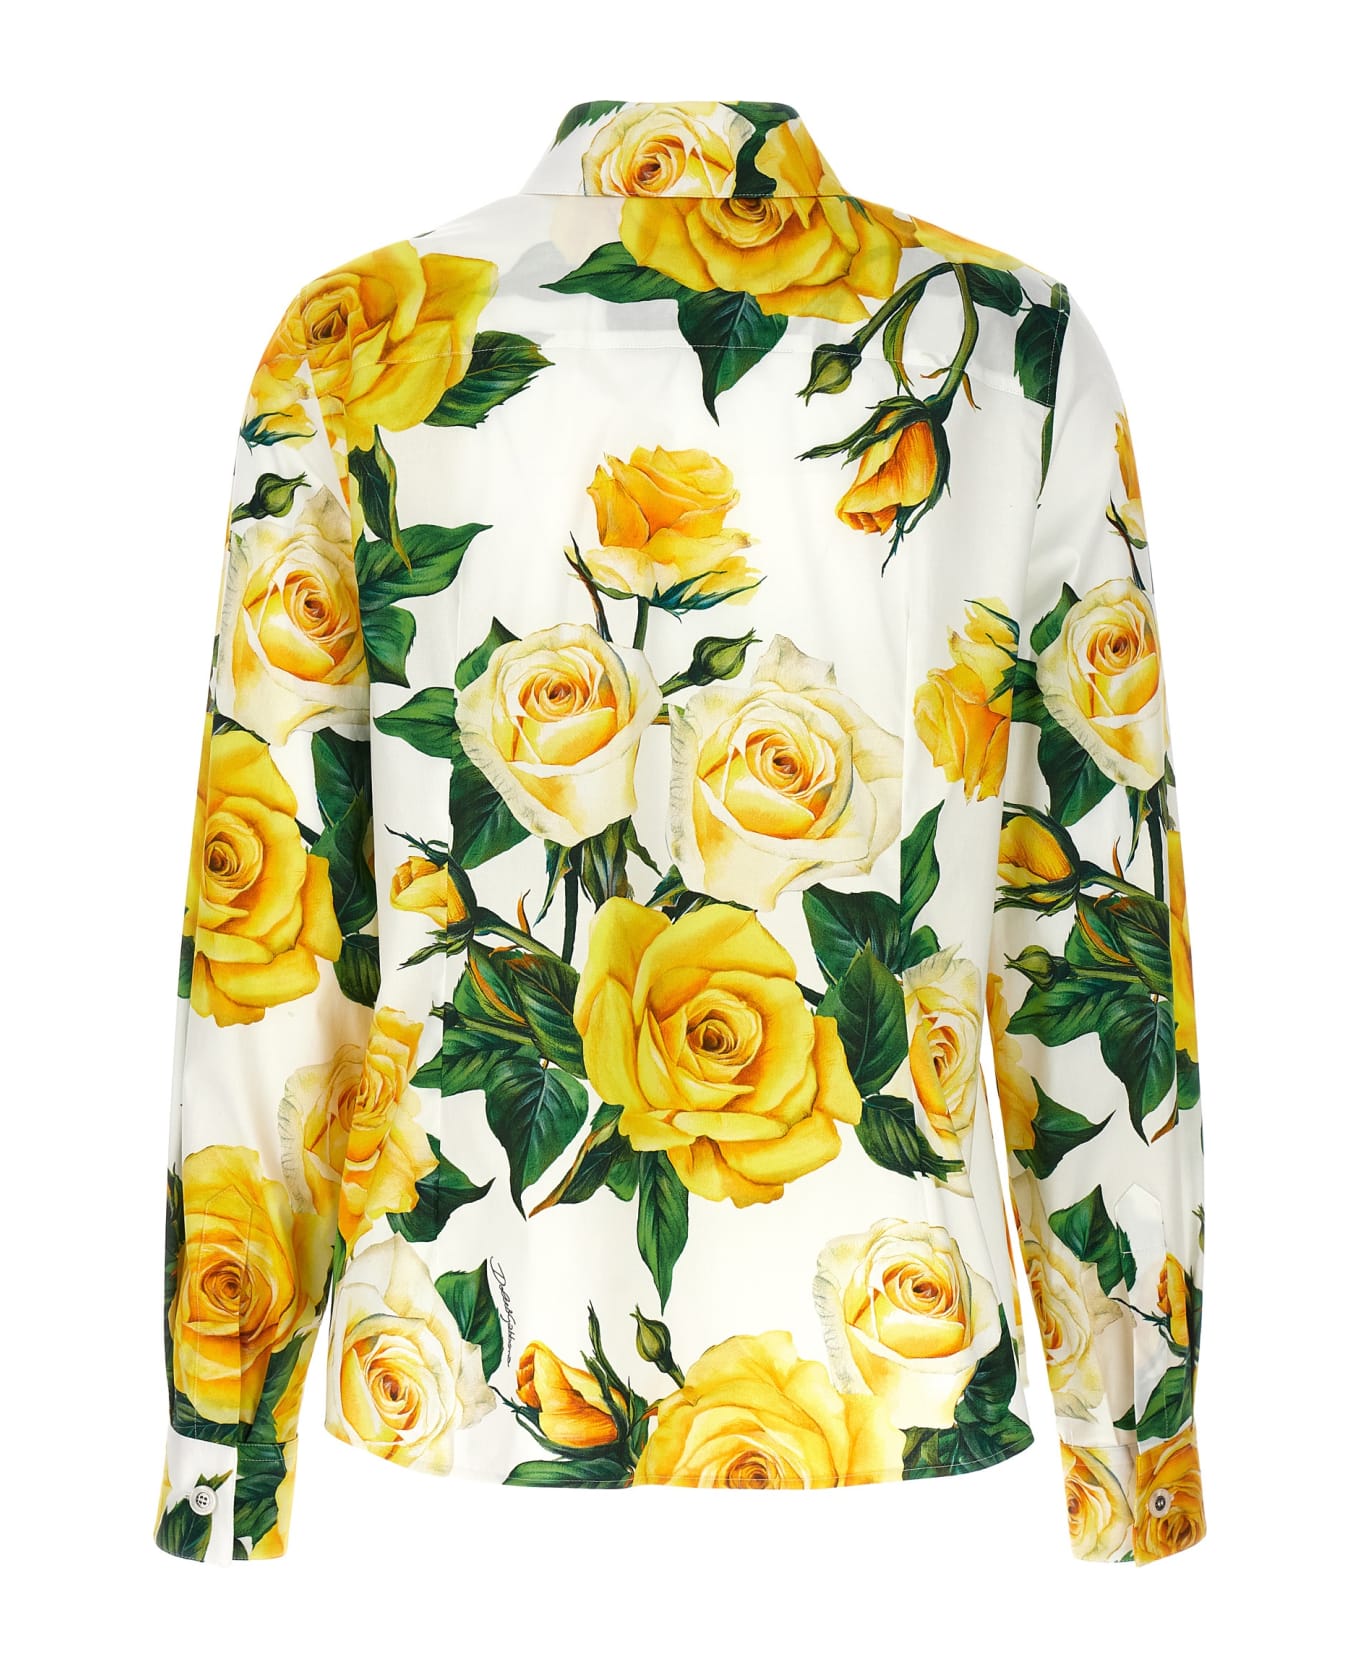 Dolce & Gabbana Rose Gialle Shirt - Vo Rose Gialle Bianco シャツ